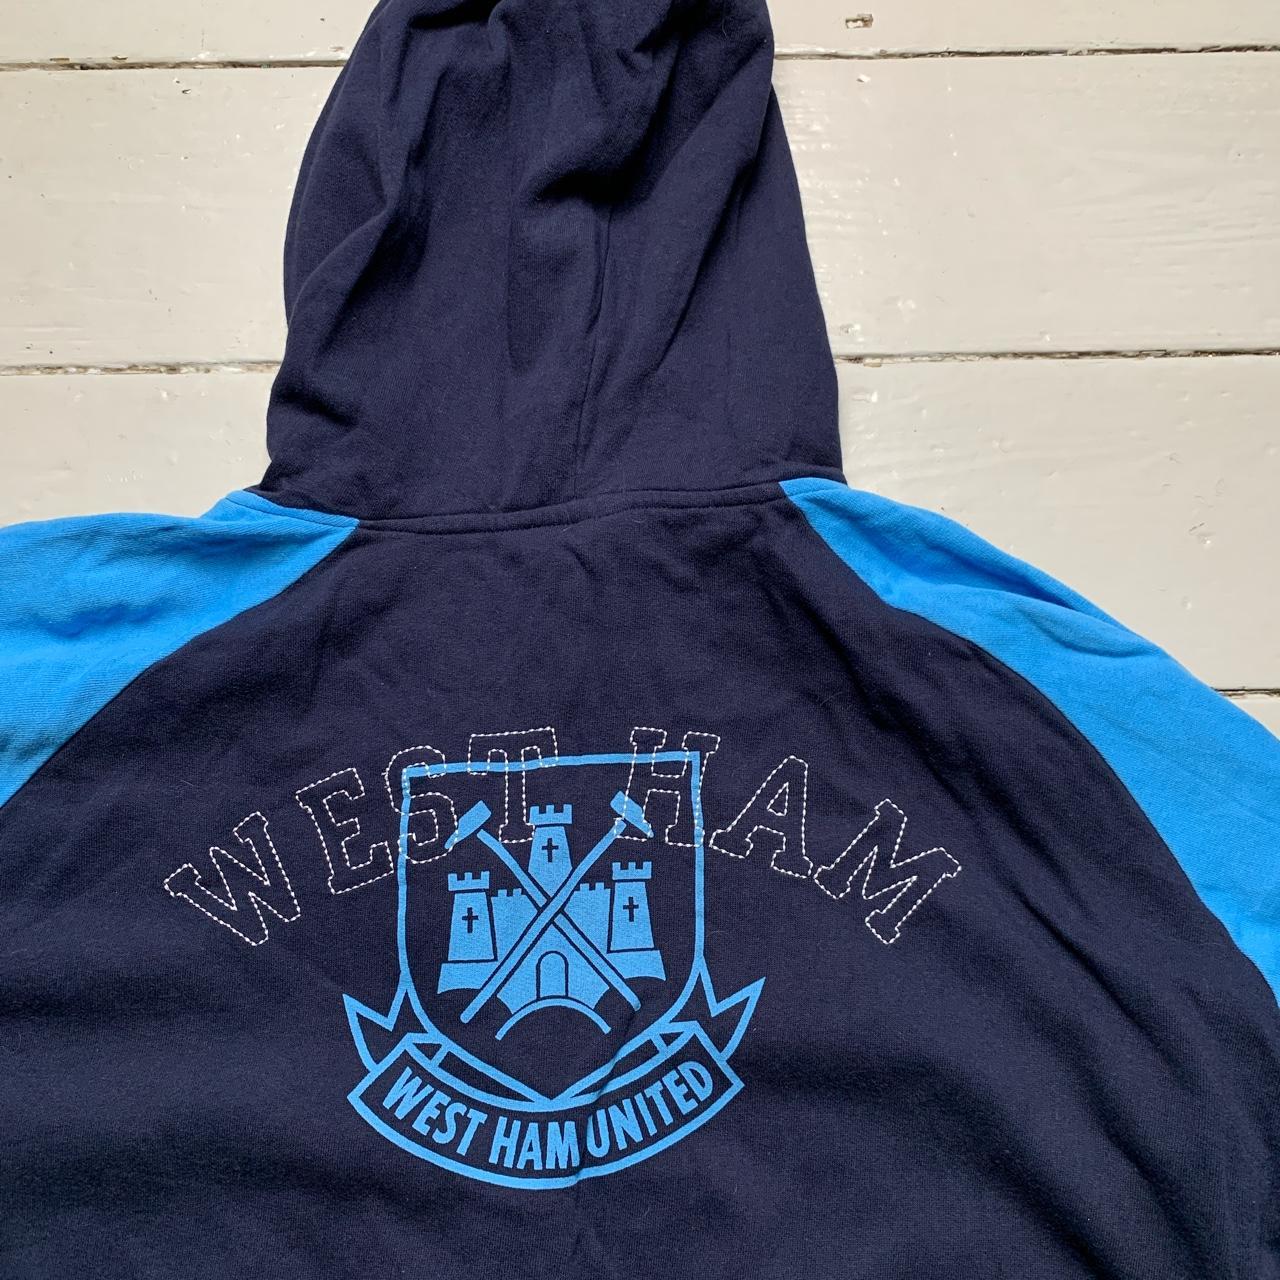 West Ham United Navy and Blue Vintage Merch Hoodie